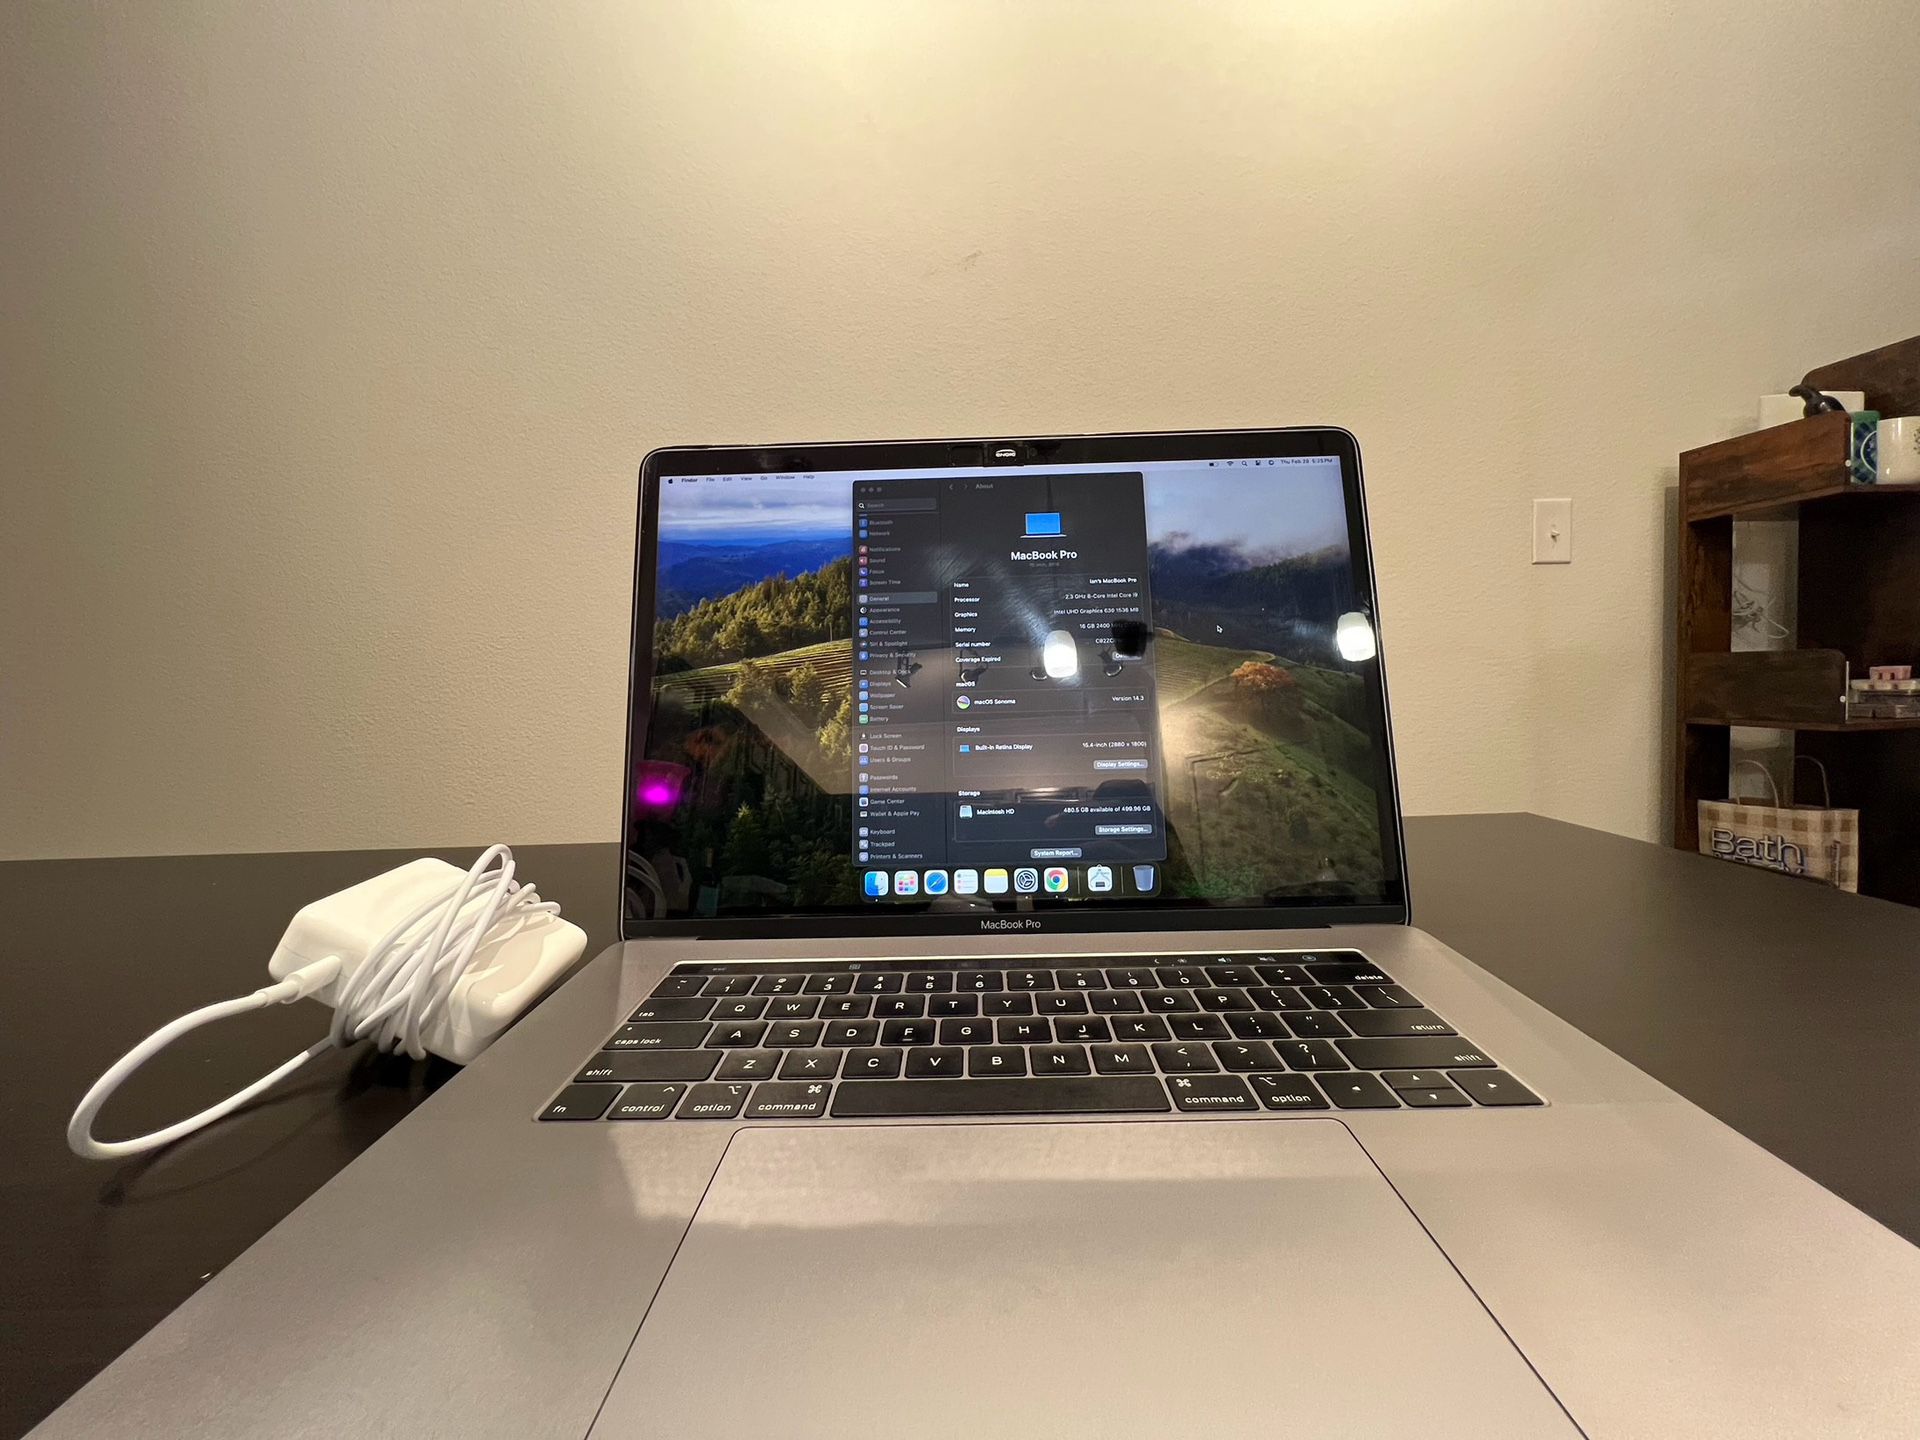 MacBook 15inc, 2019, 16GB Ram(fast)